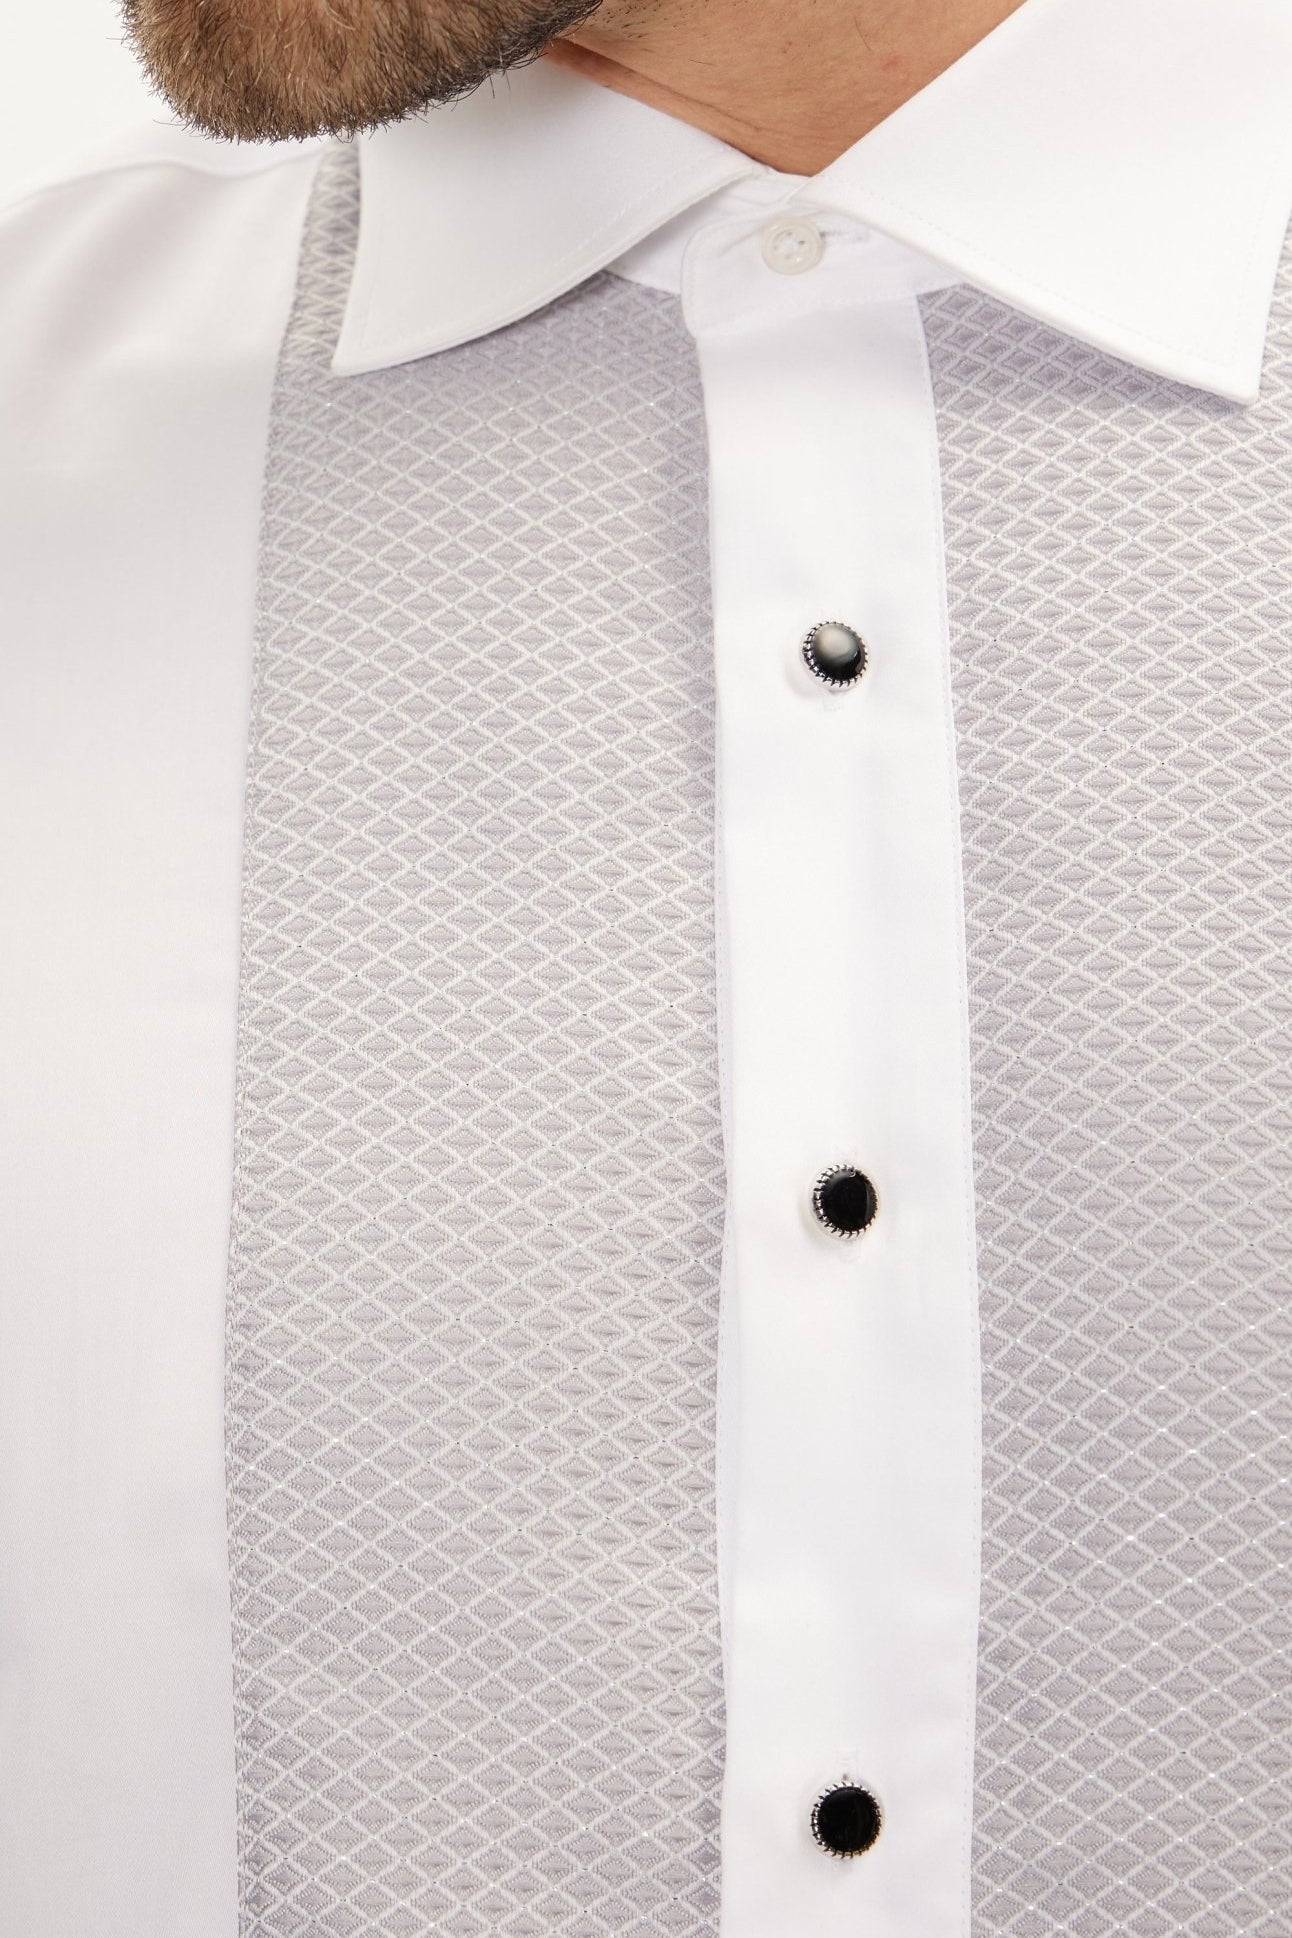 Lurex Paneled Spread Collar Shirt - White Grey - Ron Tomson